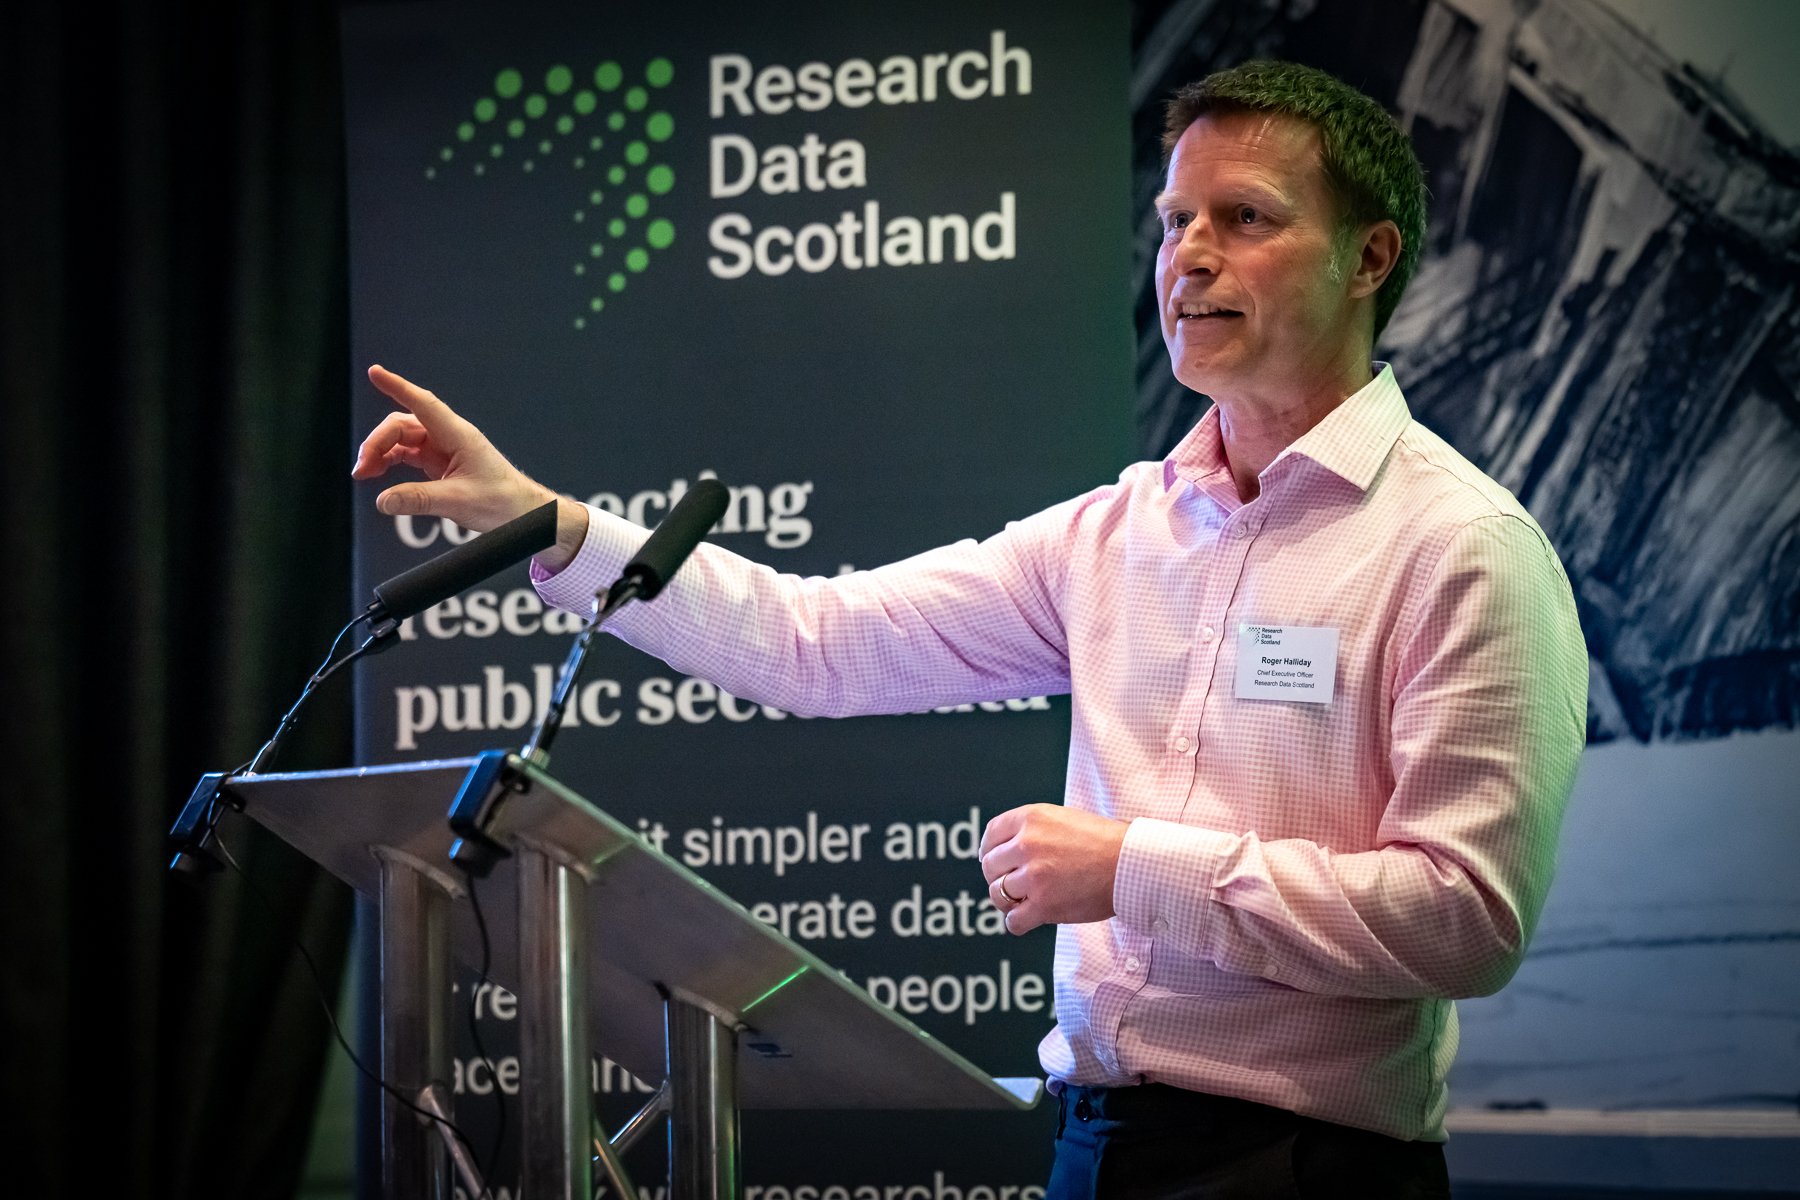 Research Data Scotland • Researcher Access Service Launch